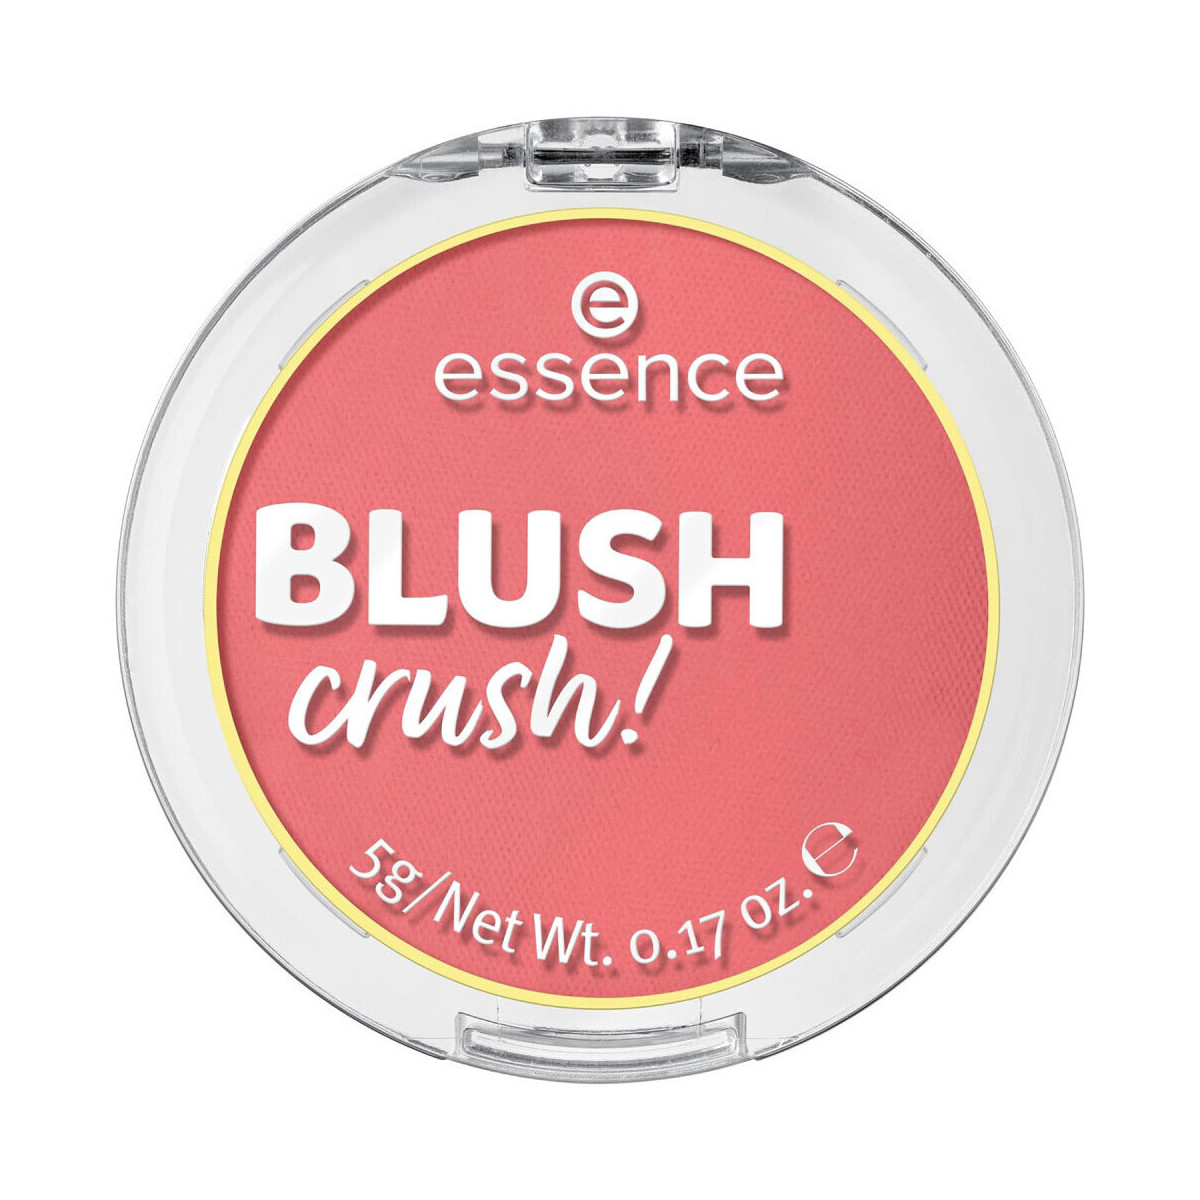 schoonheid Dames Blush & poeder Essence Blush Crush! Roze